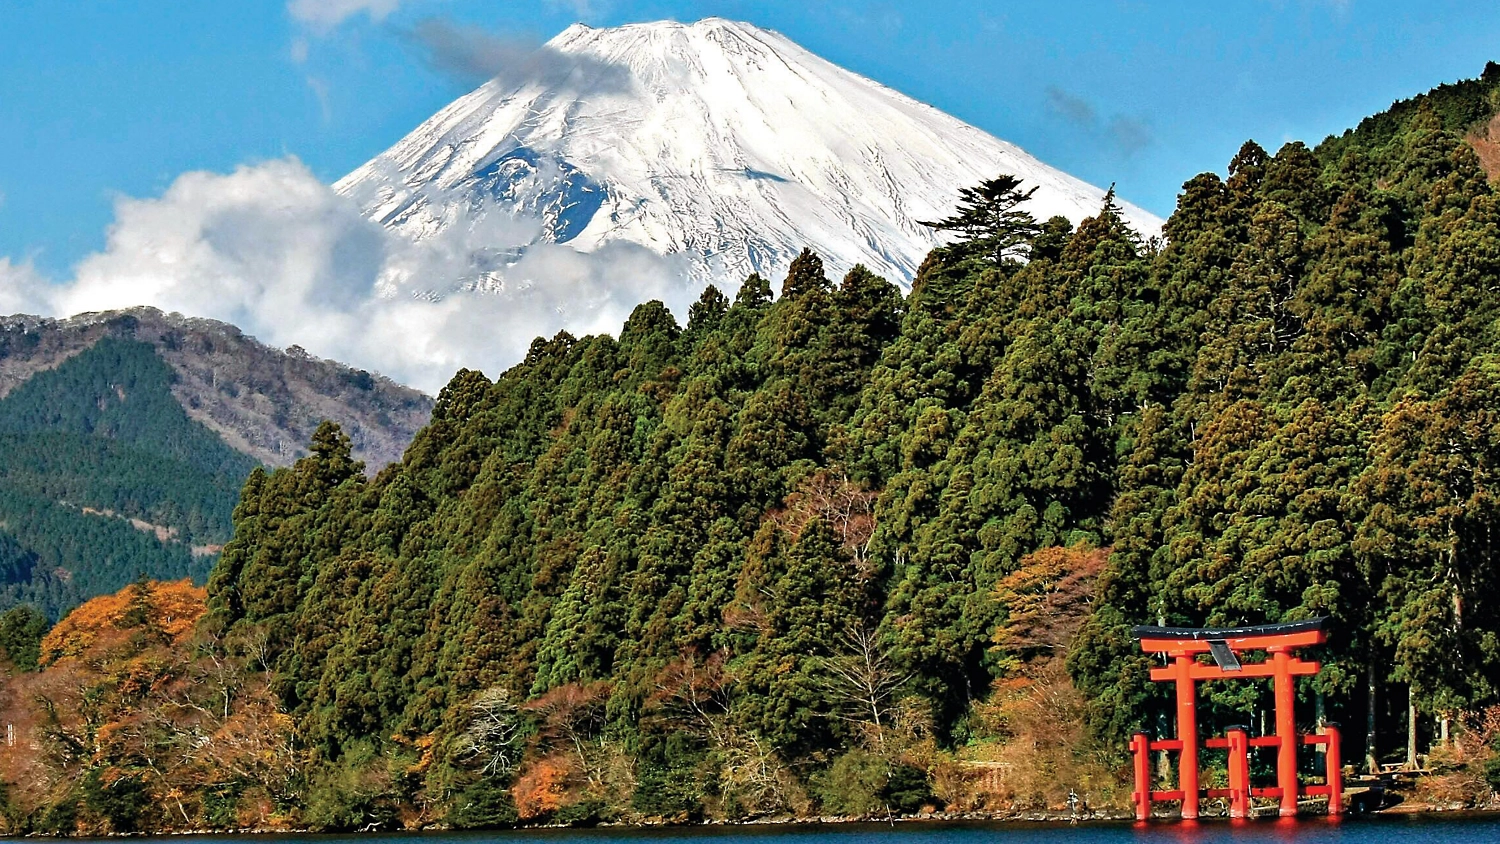 A view of Mount Fuji in Hakone Japan. Japan's Cultural Treasures - Overseas Adventure Travel